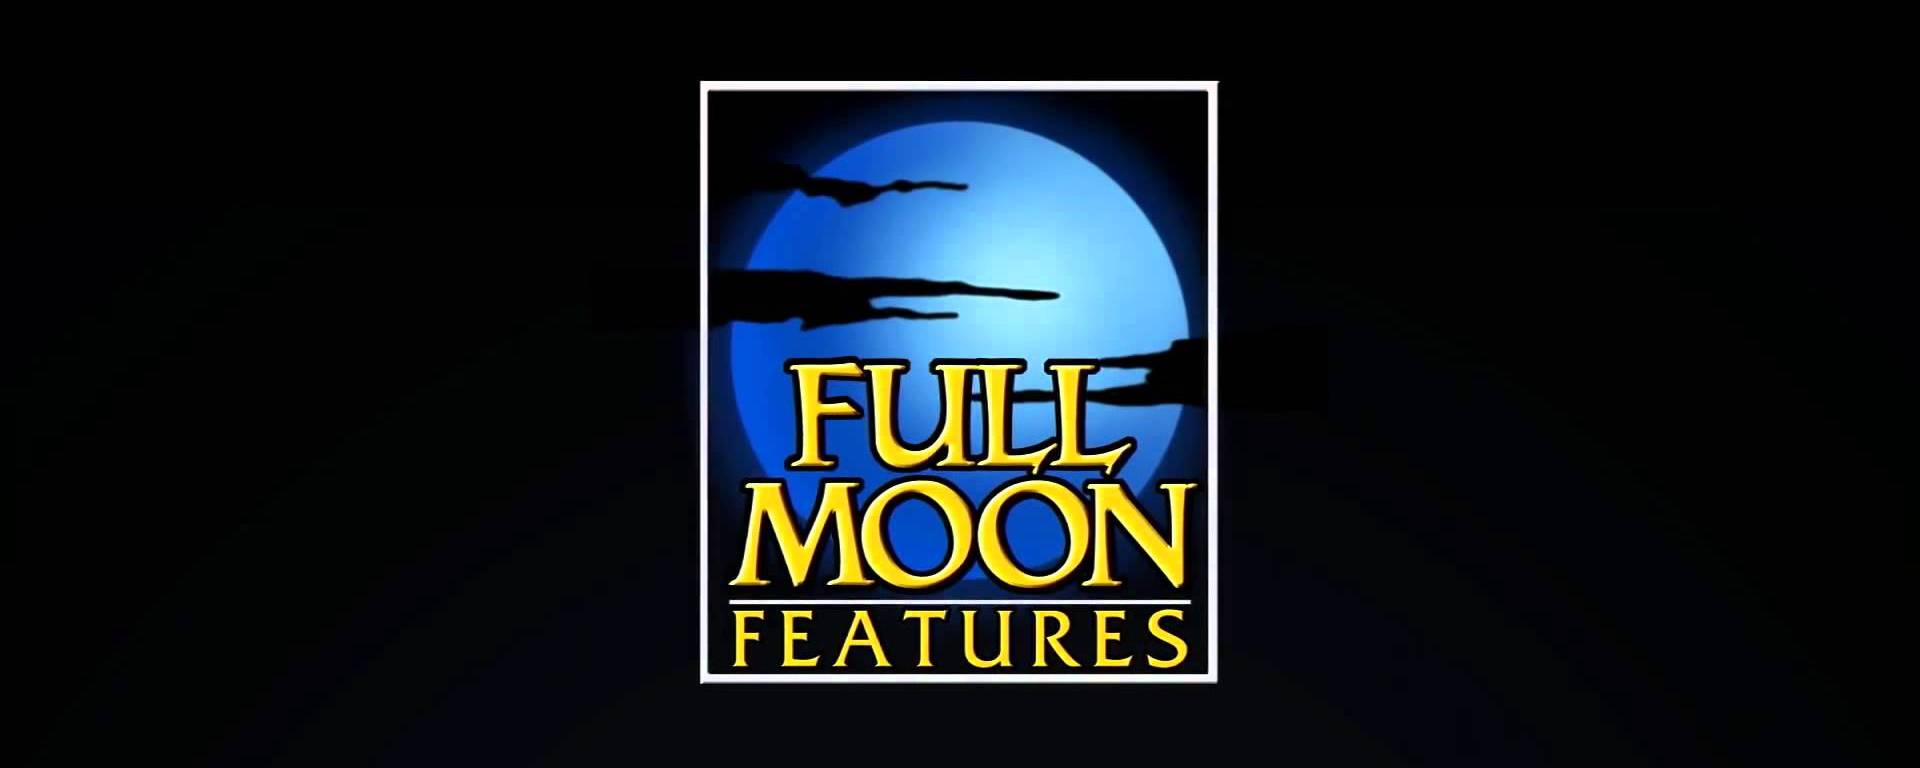 30 years of Full Moon Entertainment